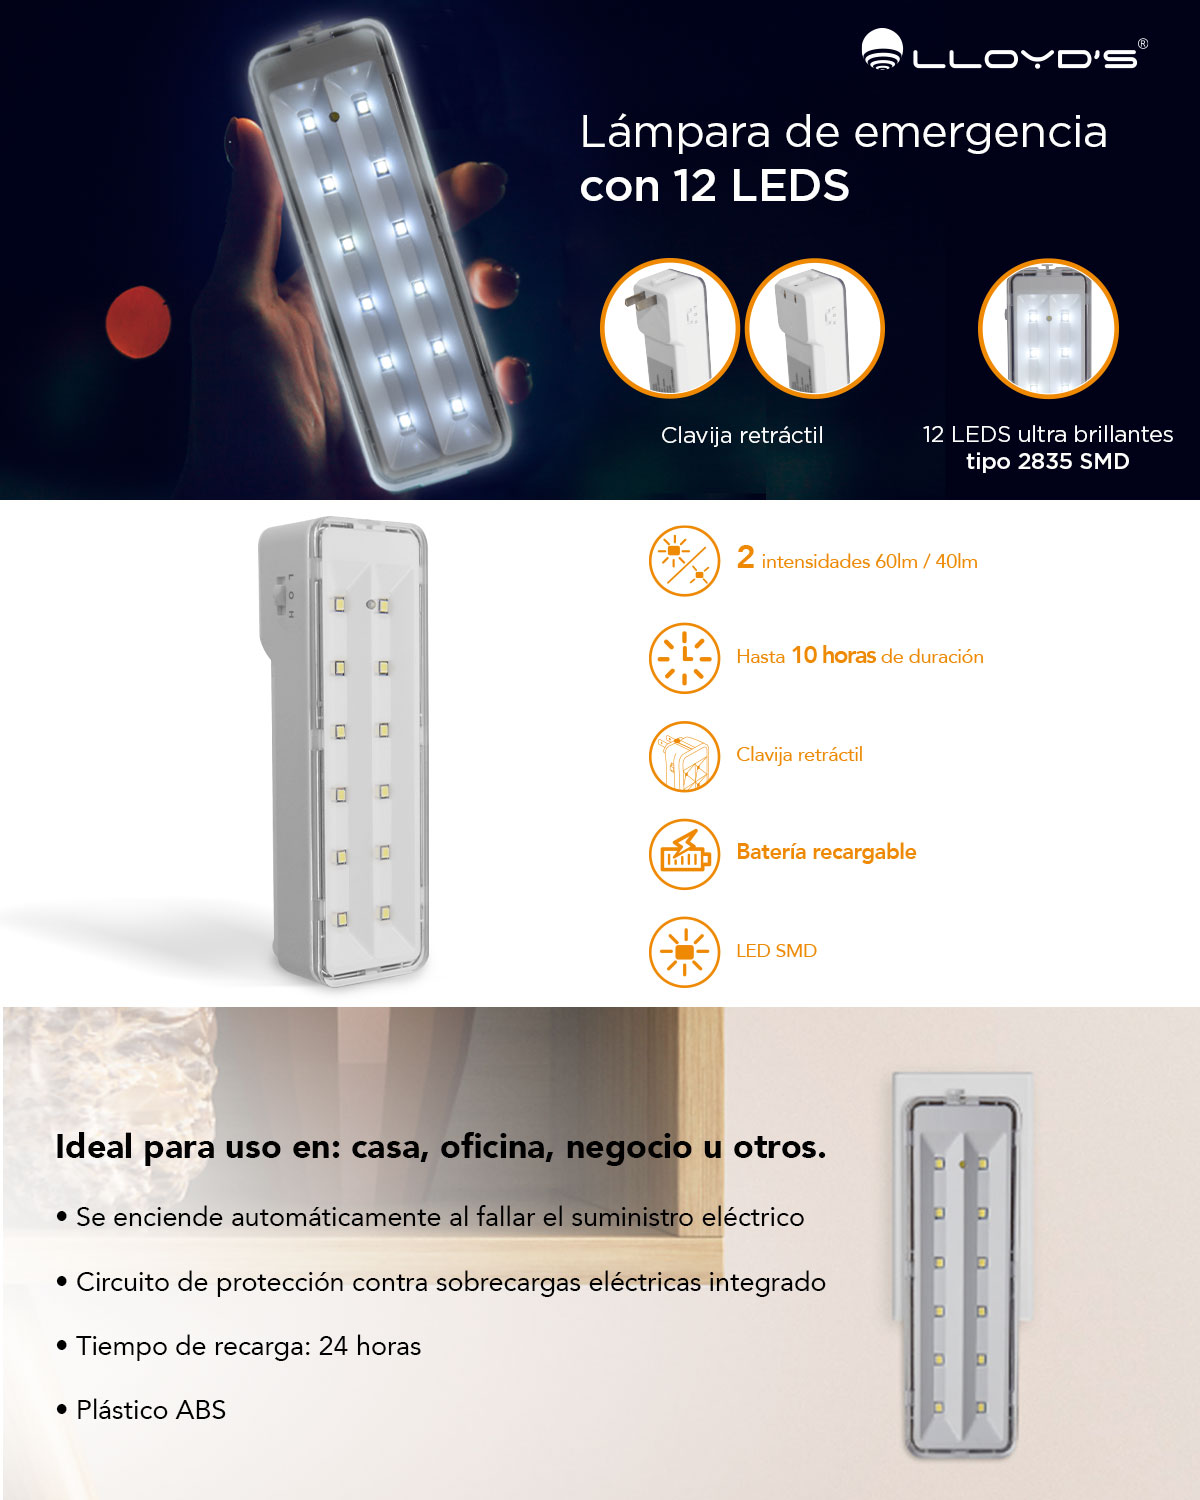 Lampara Emergencia LED Lloyds